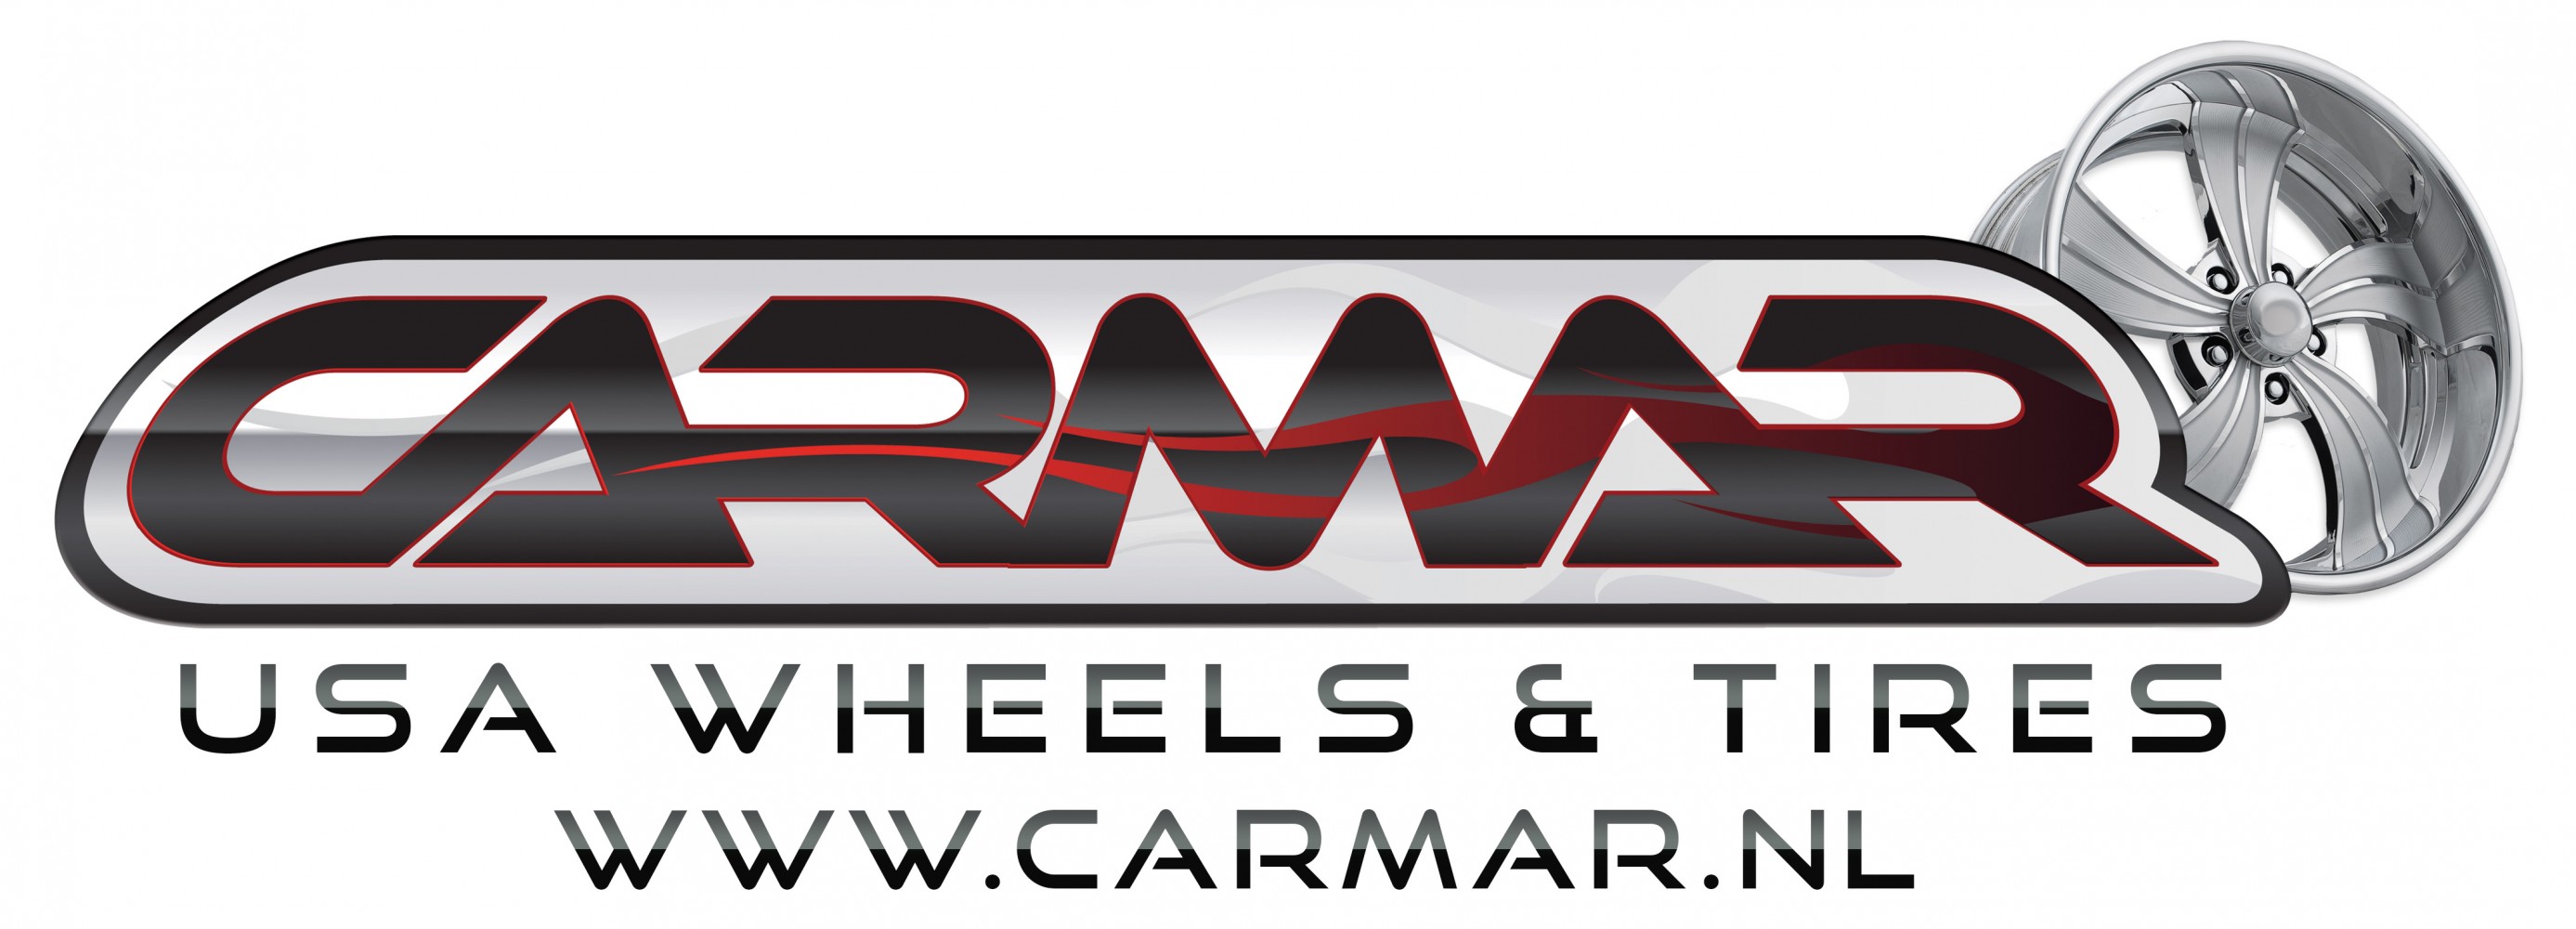 Carmar usa wheels & tires logo 